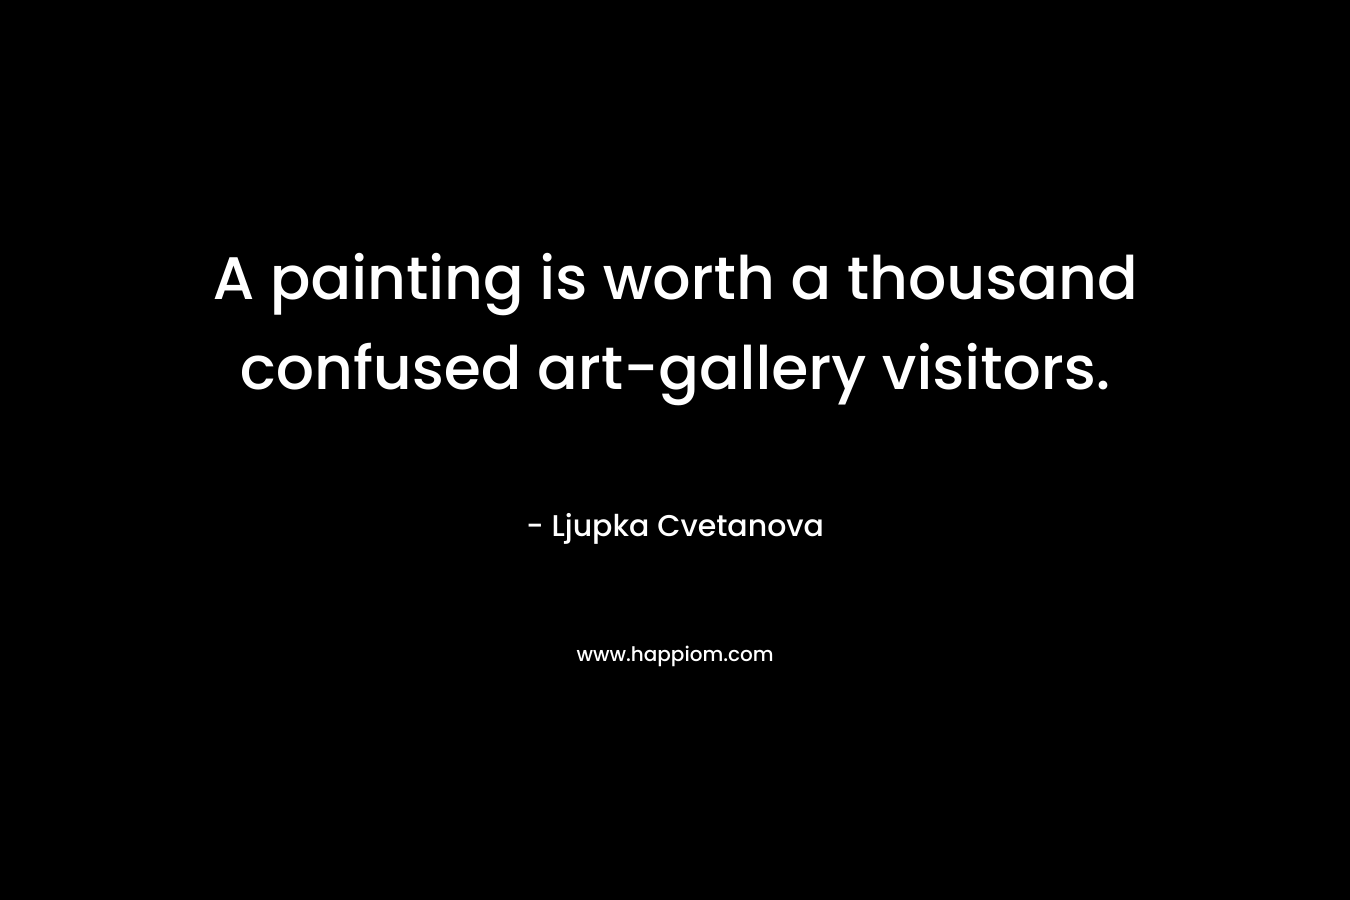 A painting is worth a thousand confused art-gallery visitors. – Ljupka Cvetanova